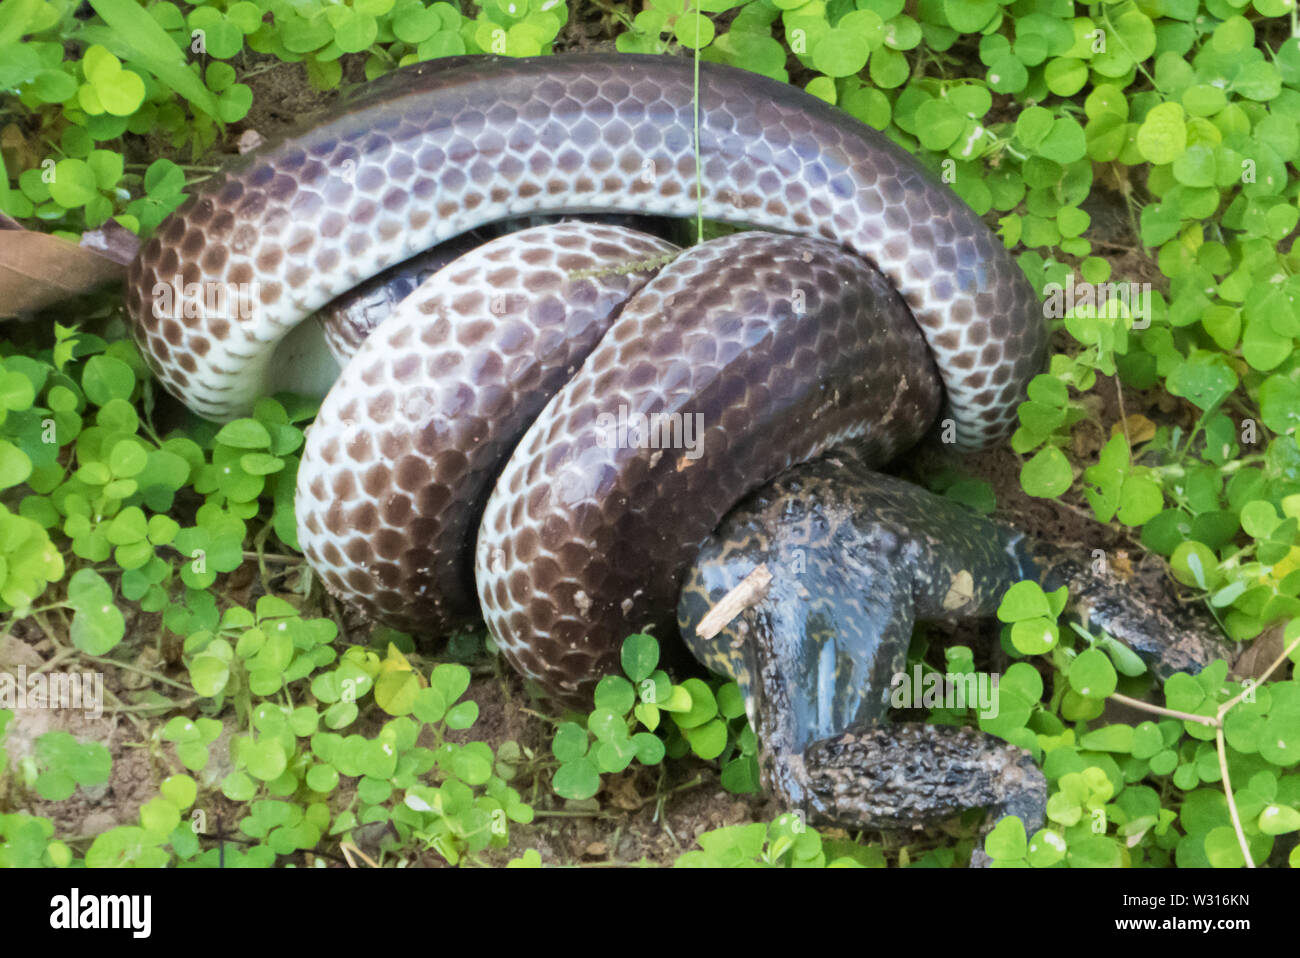 Nature rouge est tombé : ptyas korros (serpent rat indochinois) tuer une grenouille, Ta Prohm, Angkor, Siem Reap, Cambodge Banque D'Images